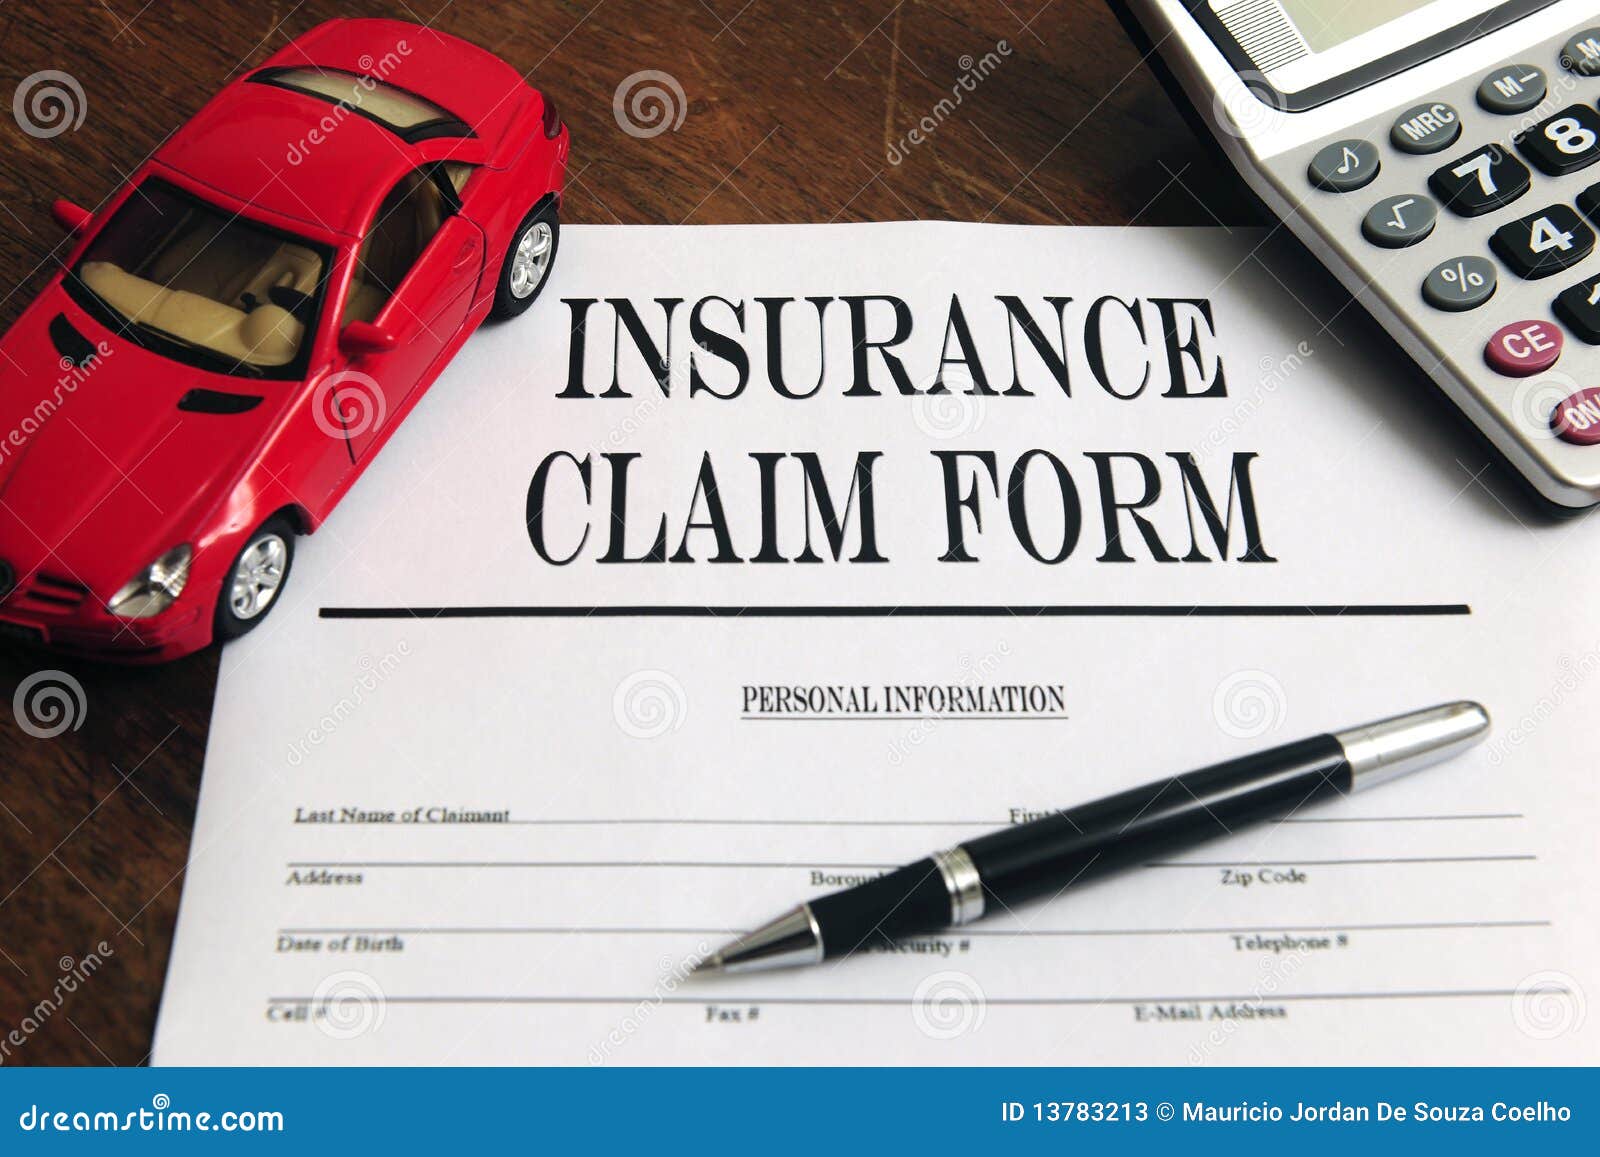 Car Insurance Claim Form On Desk Stock Photos - Image: 13783213